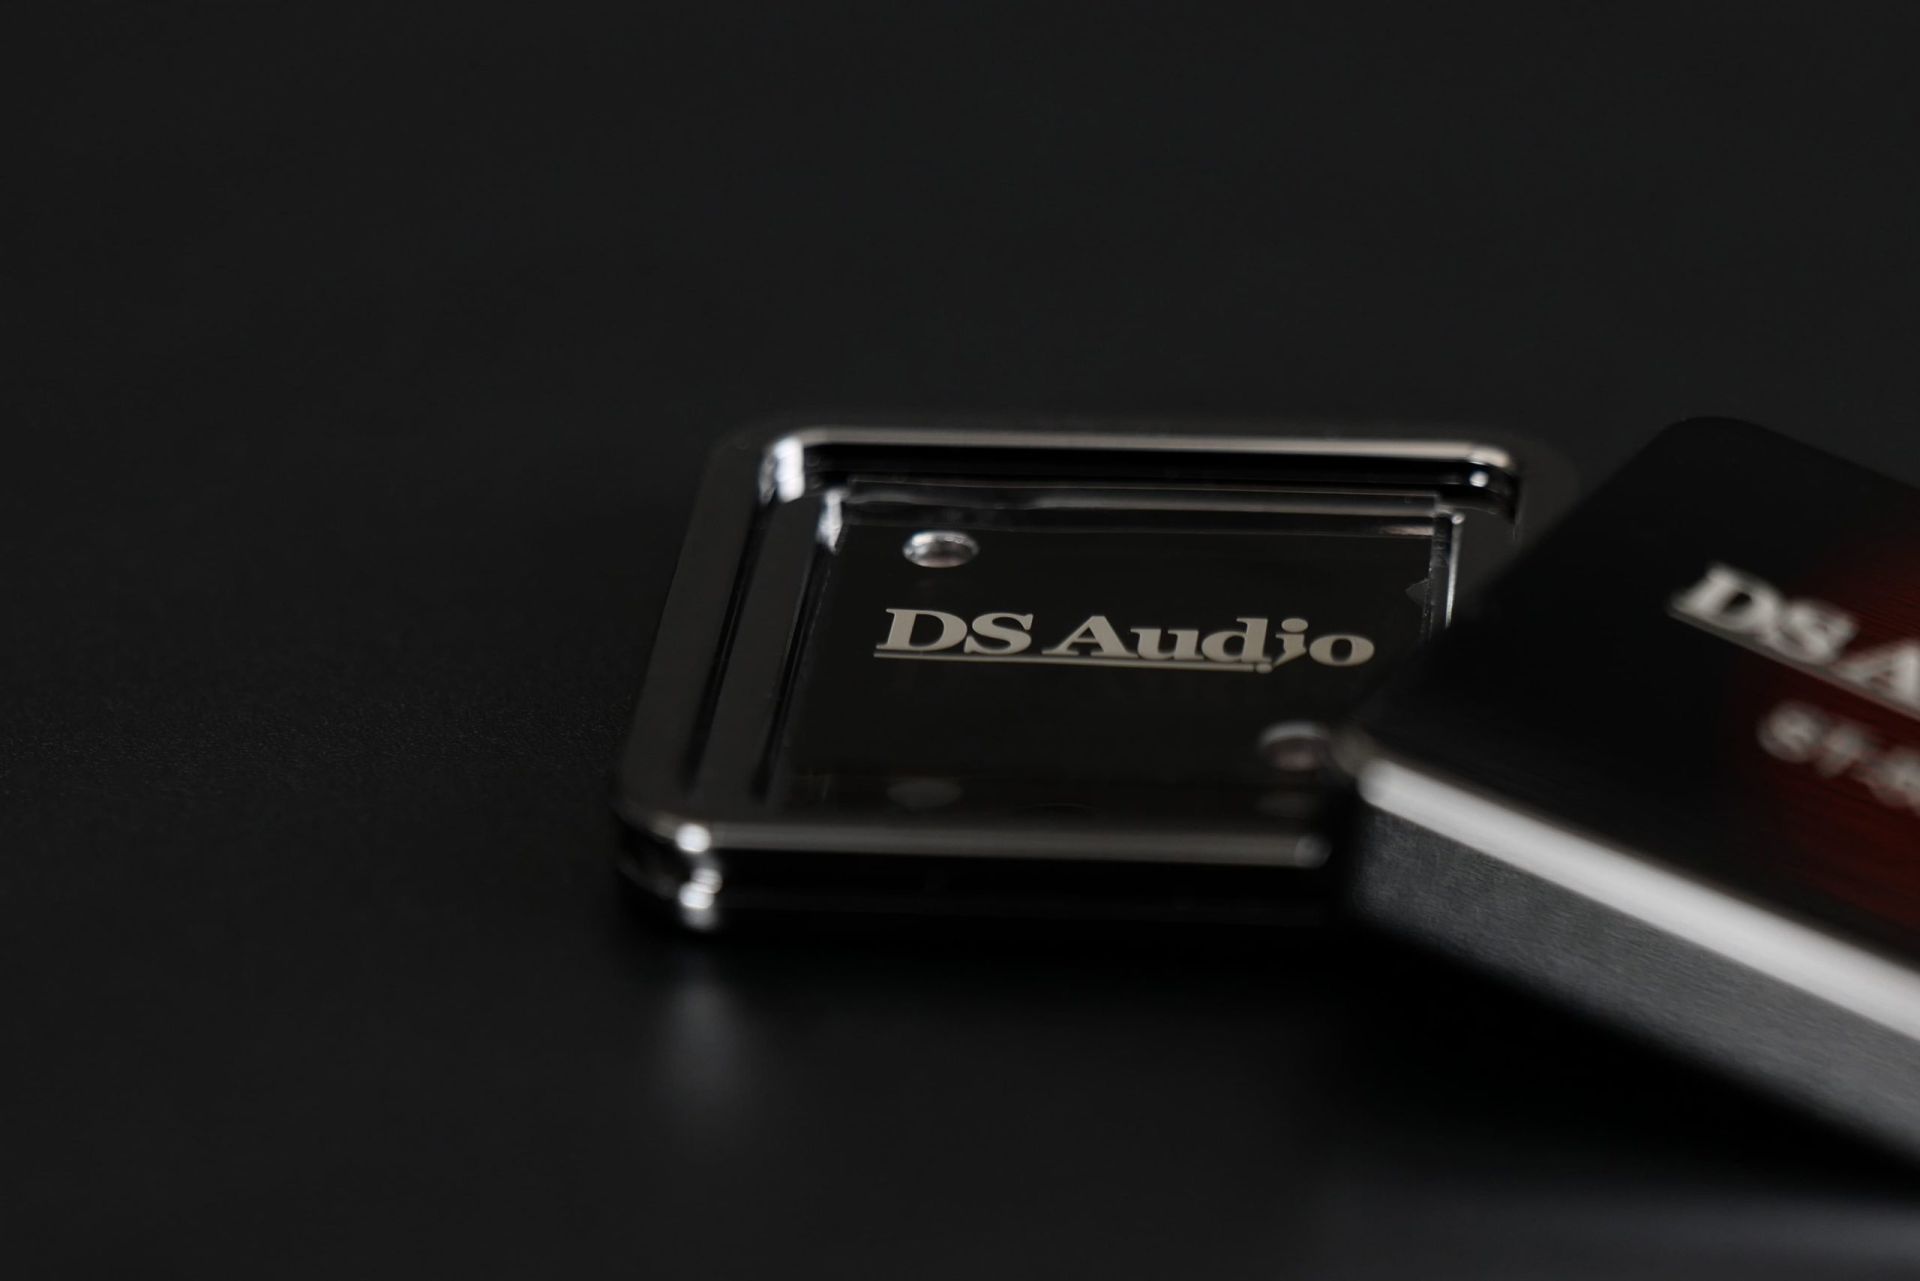 DS Audio ST-50 Stylus Cleaner DS Audio slide 2 of 9